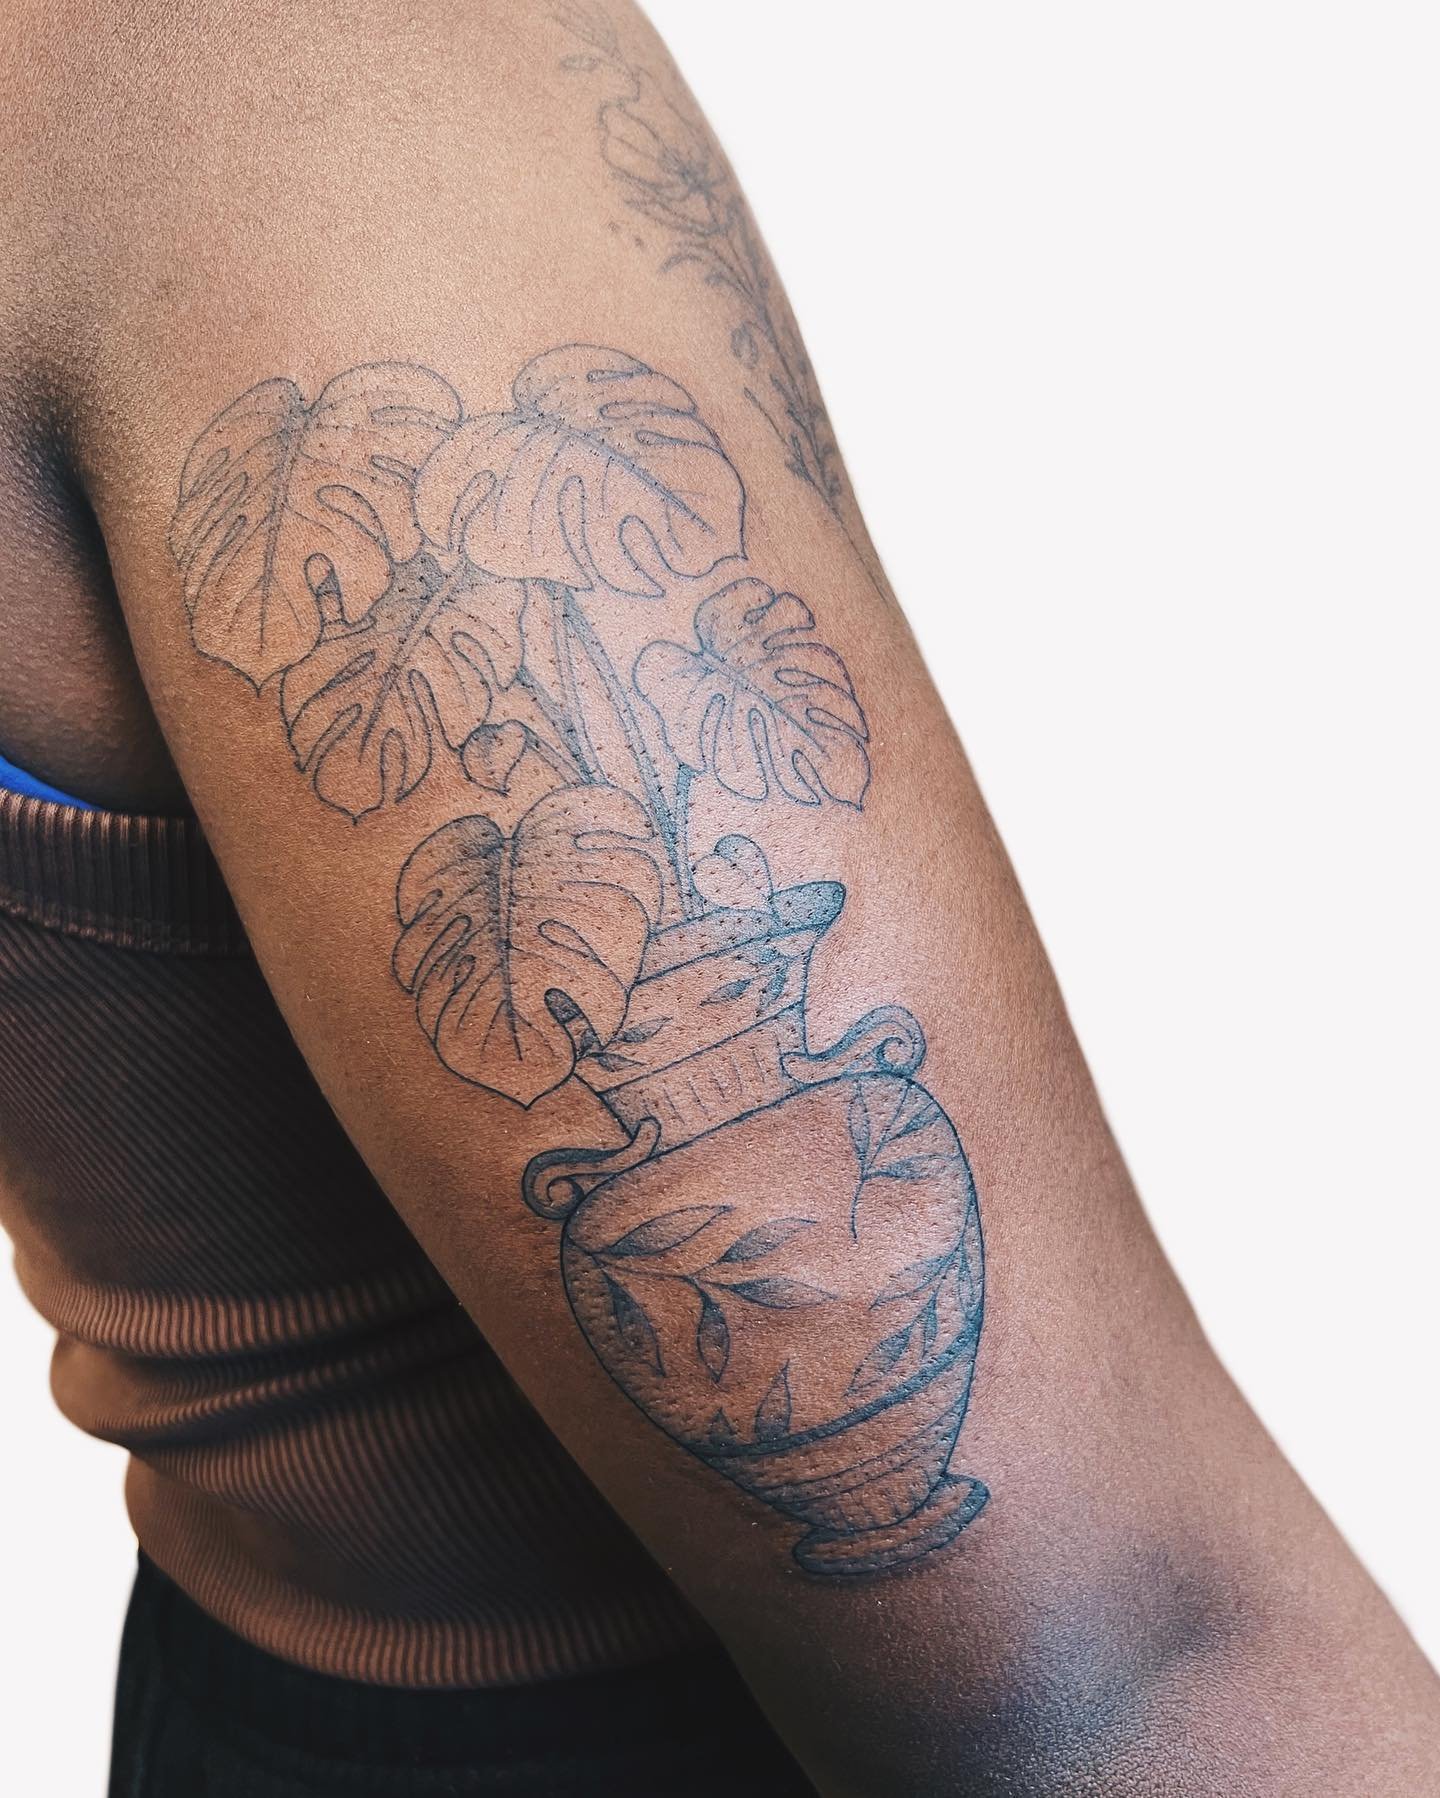 Vase with monstera leaves for the lovely @sorayaellis_ 💗
.
.
.
@timeless_tattoo_company 
#tattoo #tattooideas #tattoos #tattooart #tattooartist #girlswithtattoos #ink #inked #dotwork #dotworktattoo #stippling #blackandgreytattoo #stippletattoo #art 